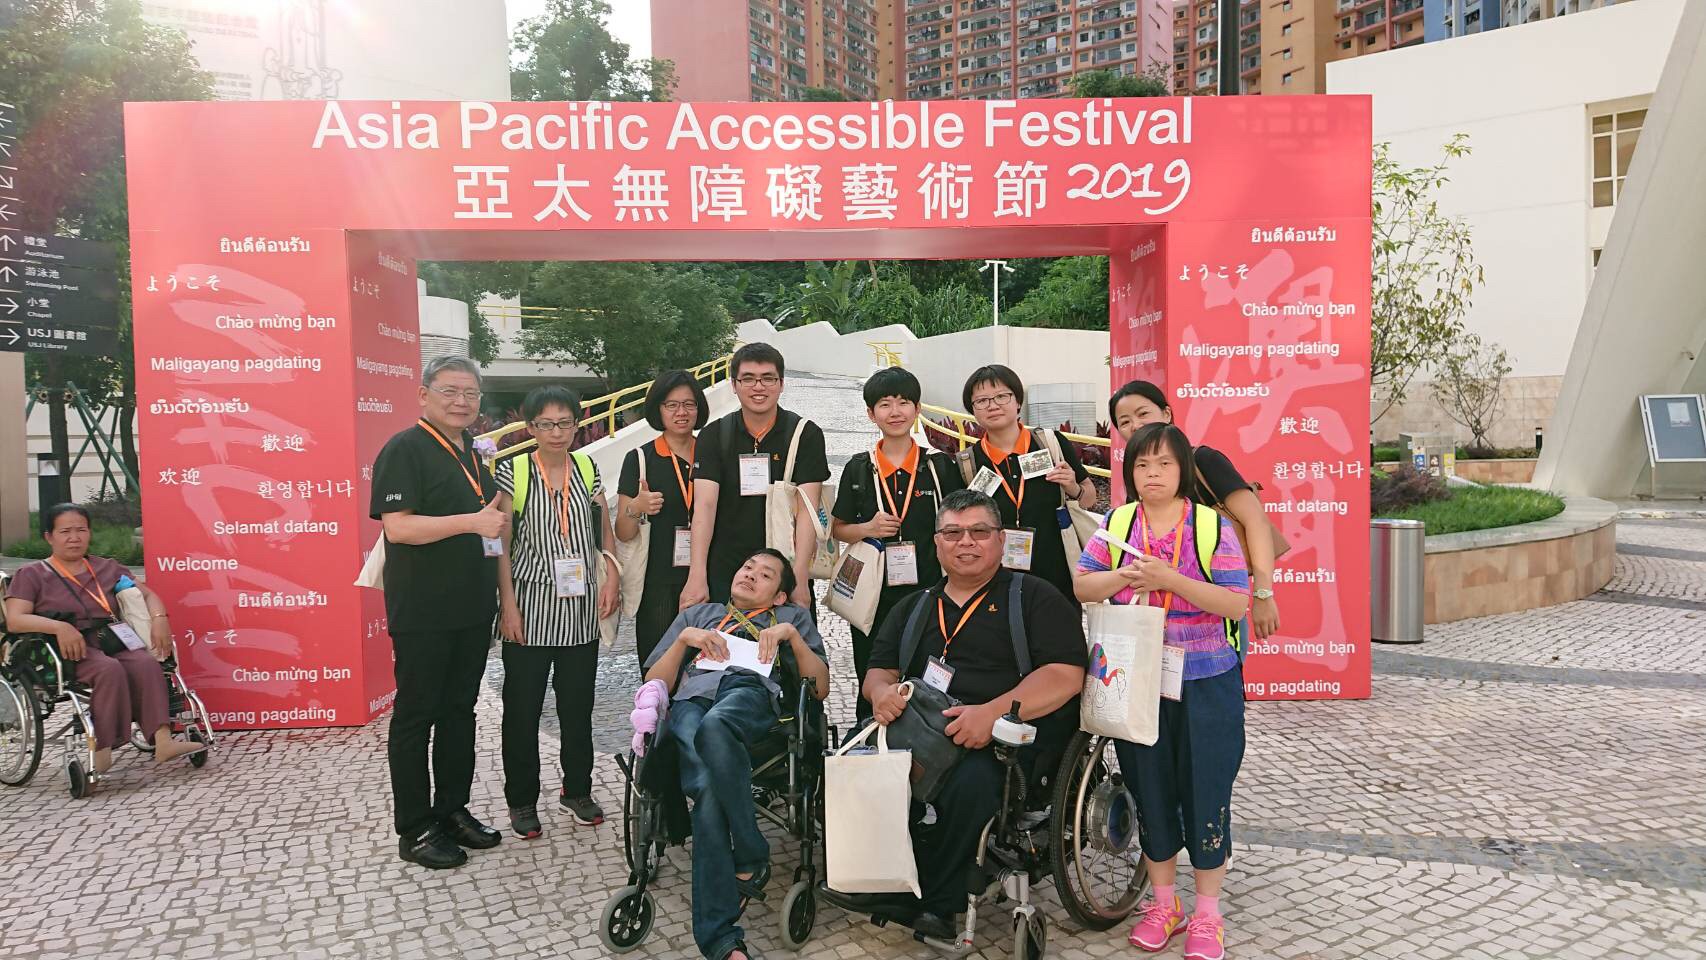 Eden participated the Asia Pacific Accessible Festival